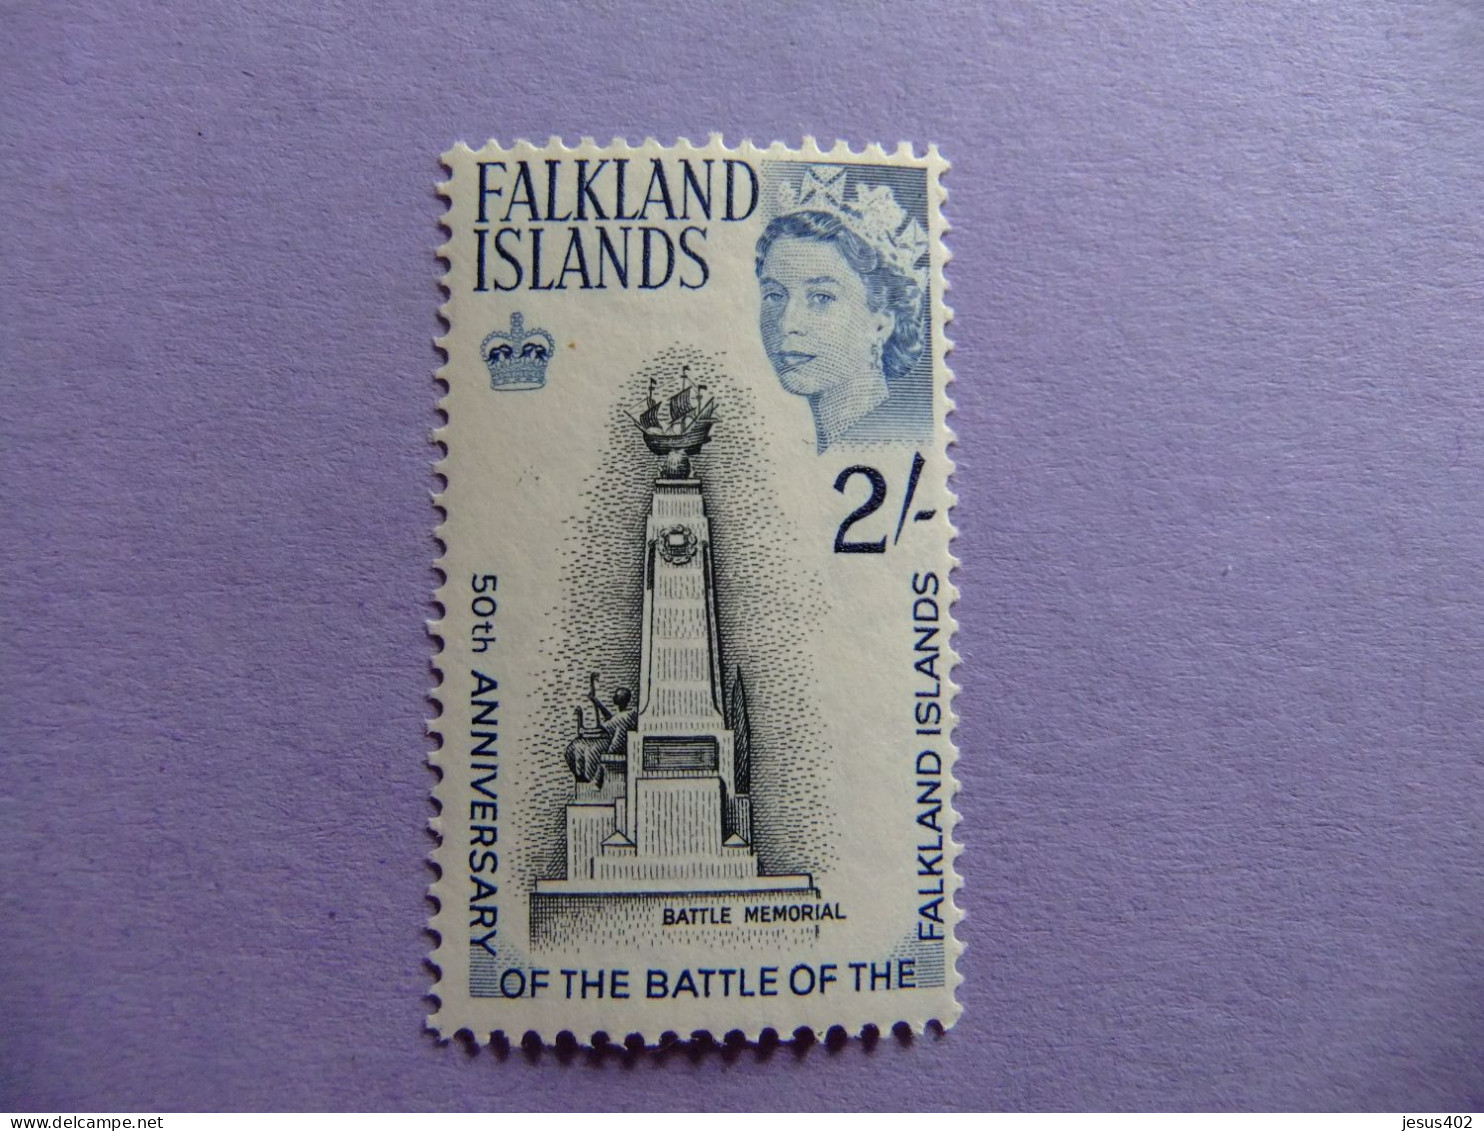 MALVINAS FALKLAND ISLANDS 1964 MEMORIAL DE LA BATALLA E FALKLAND YVERT 147 MNH - Maldivas (...-1965)